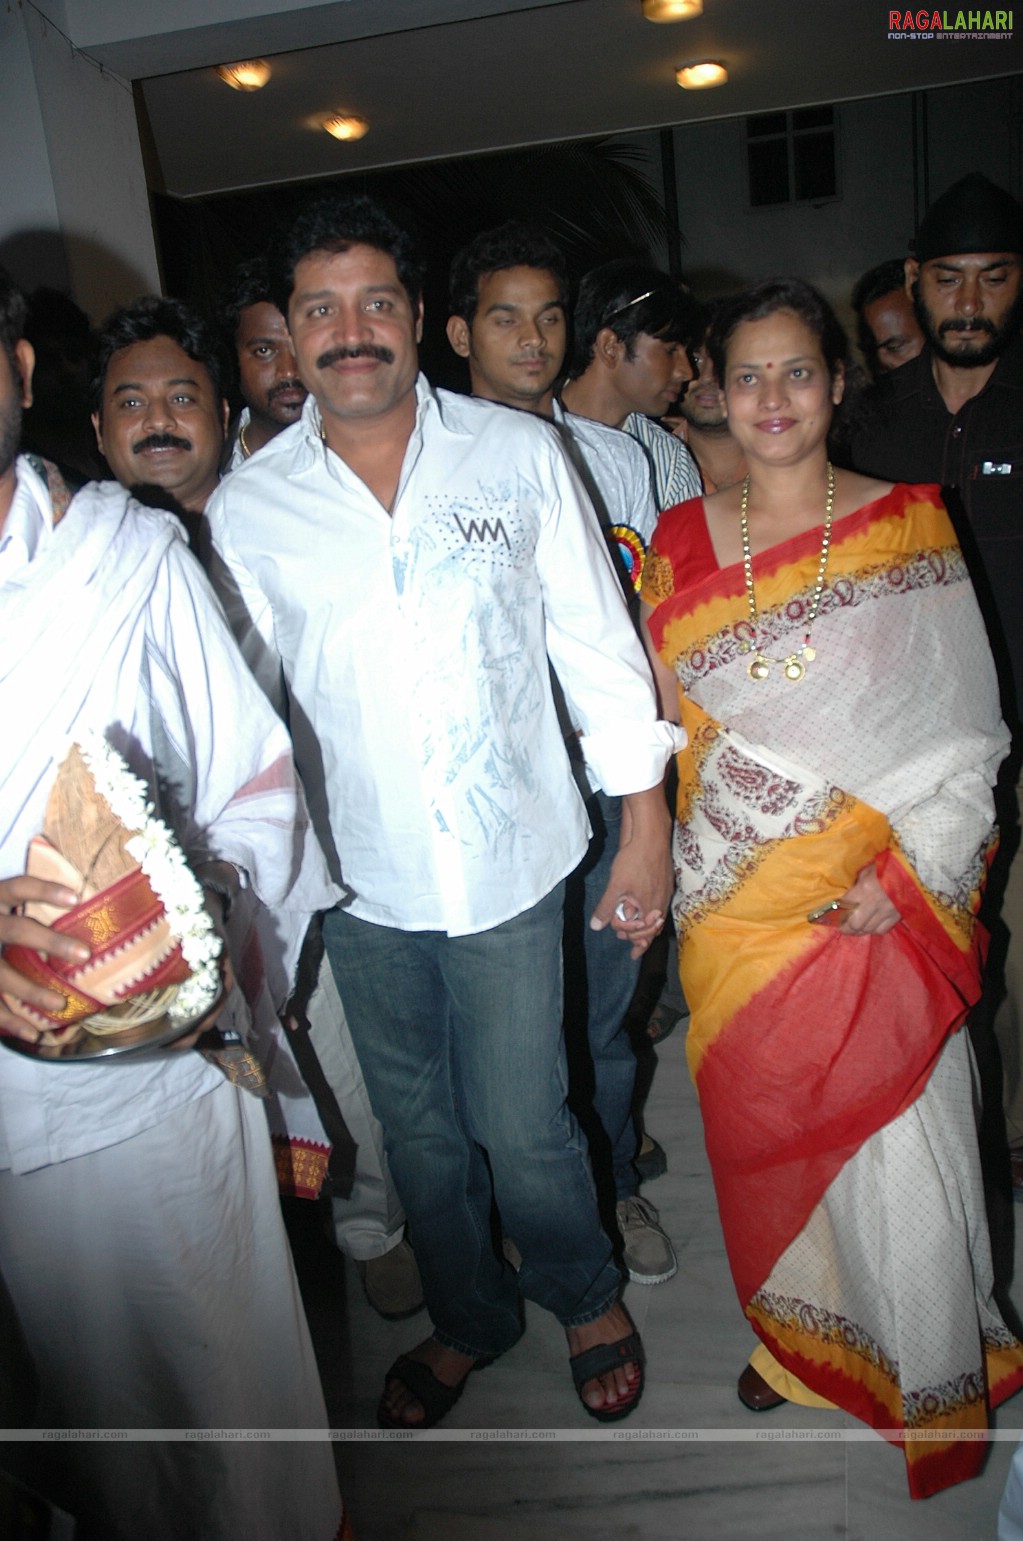 Swarna Bharathi Film Awards 2009